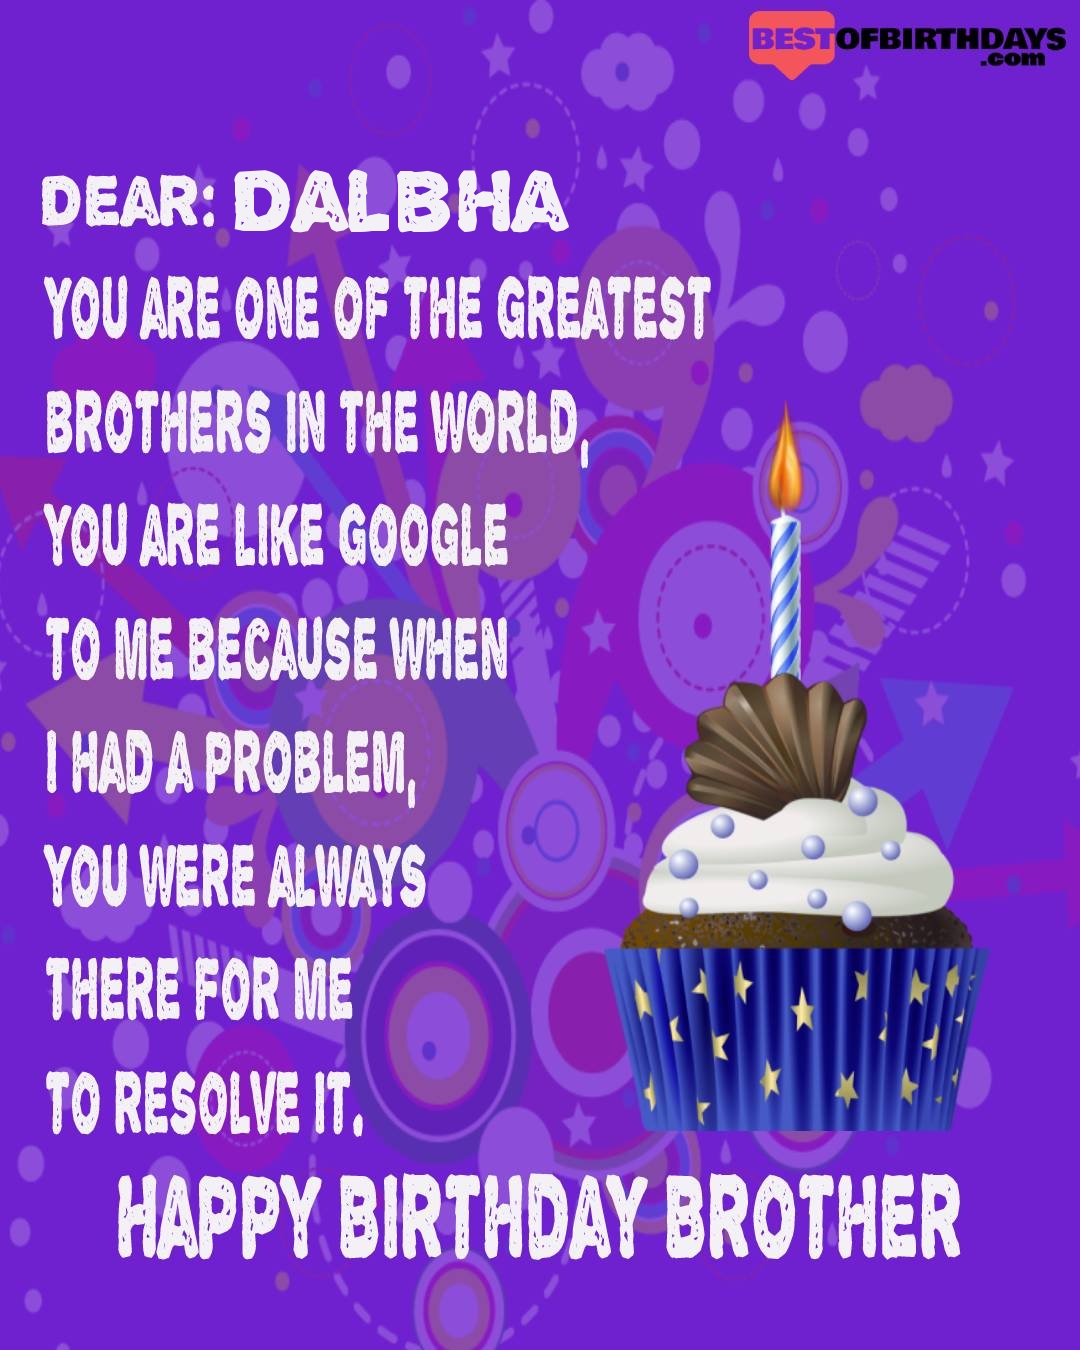 Happy birthday dalbha bhai brother bro